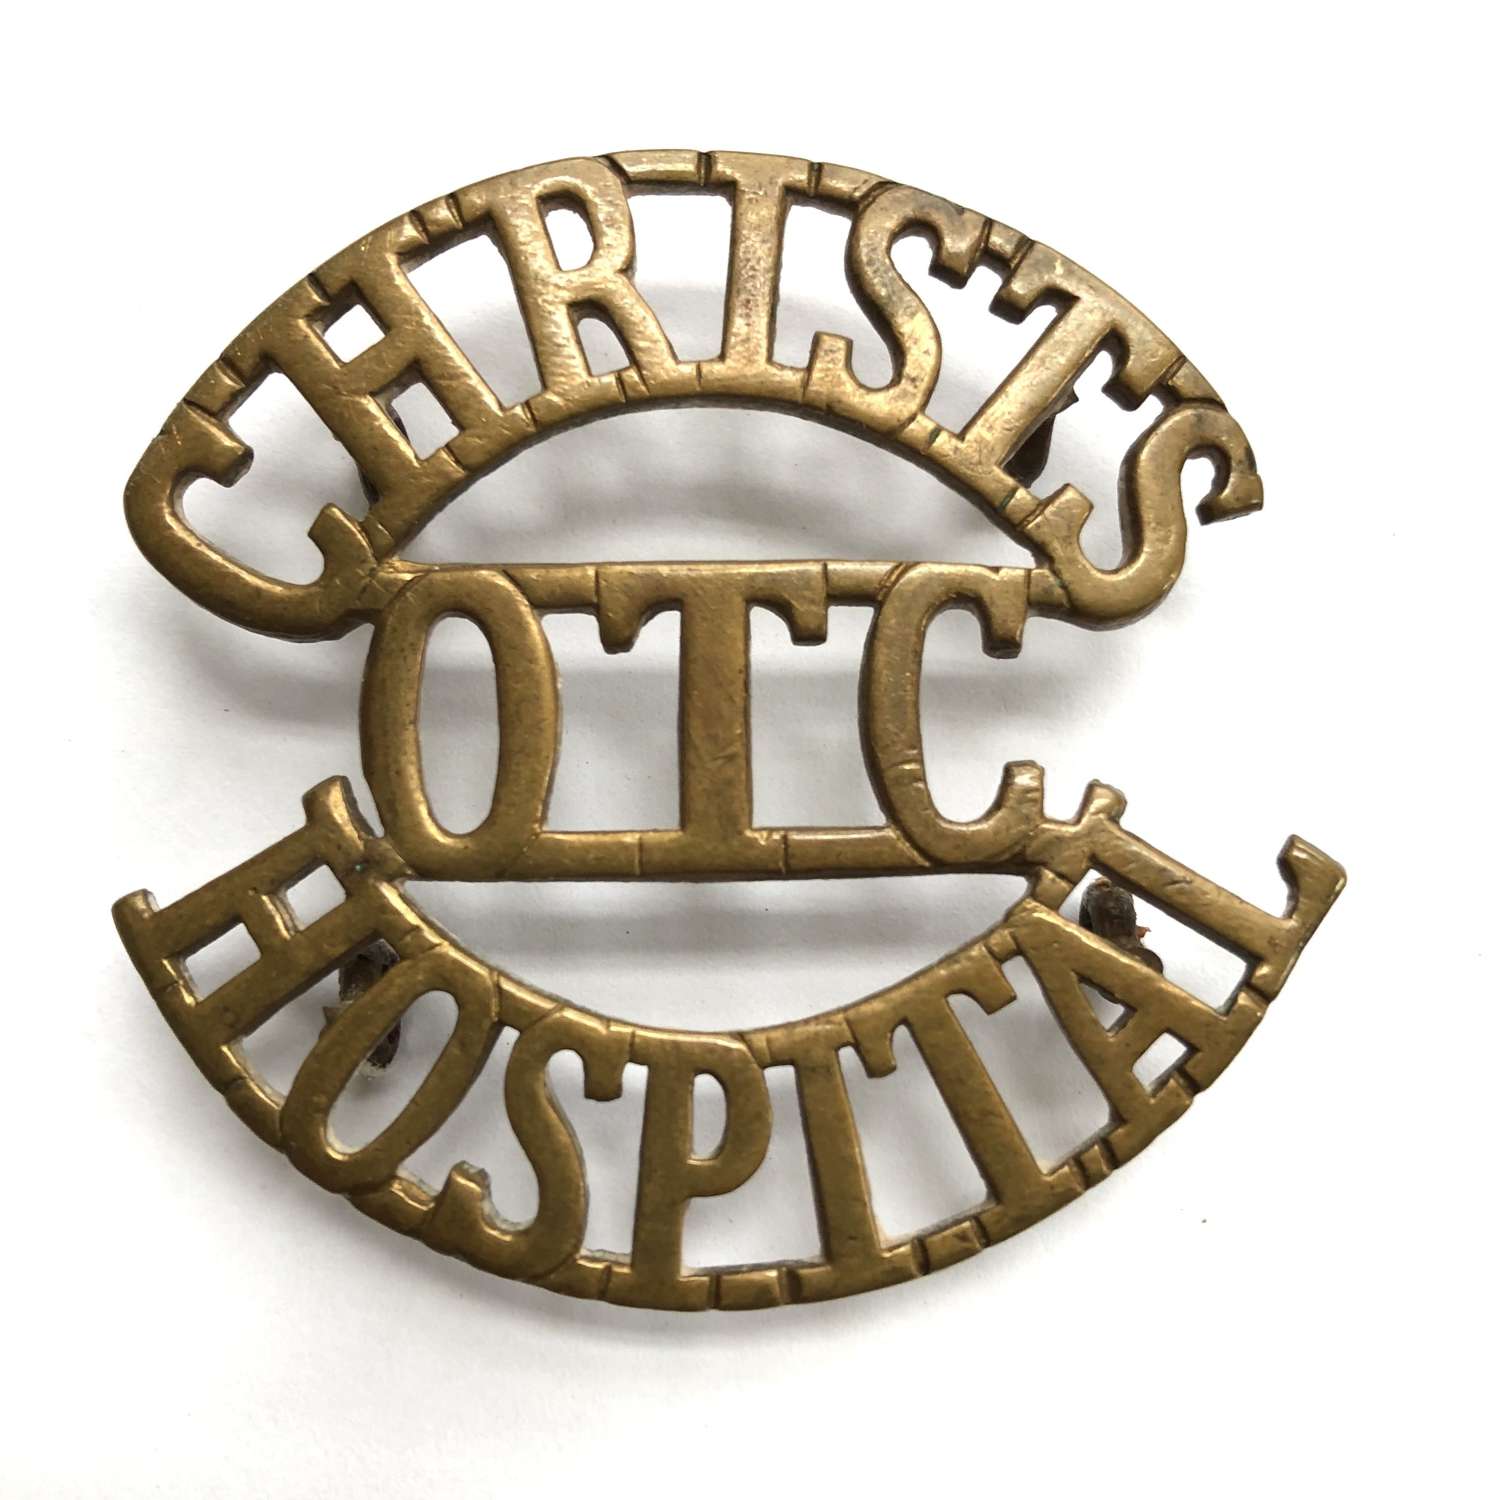 CHRISTS / OTC / HOSPITAL large Sussex shoulder title circa 1908-40